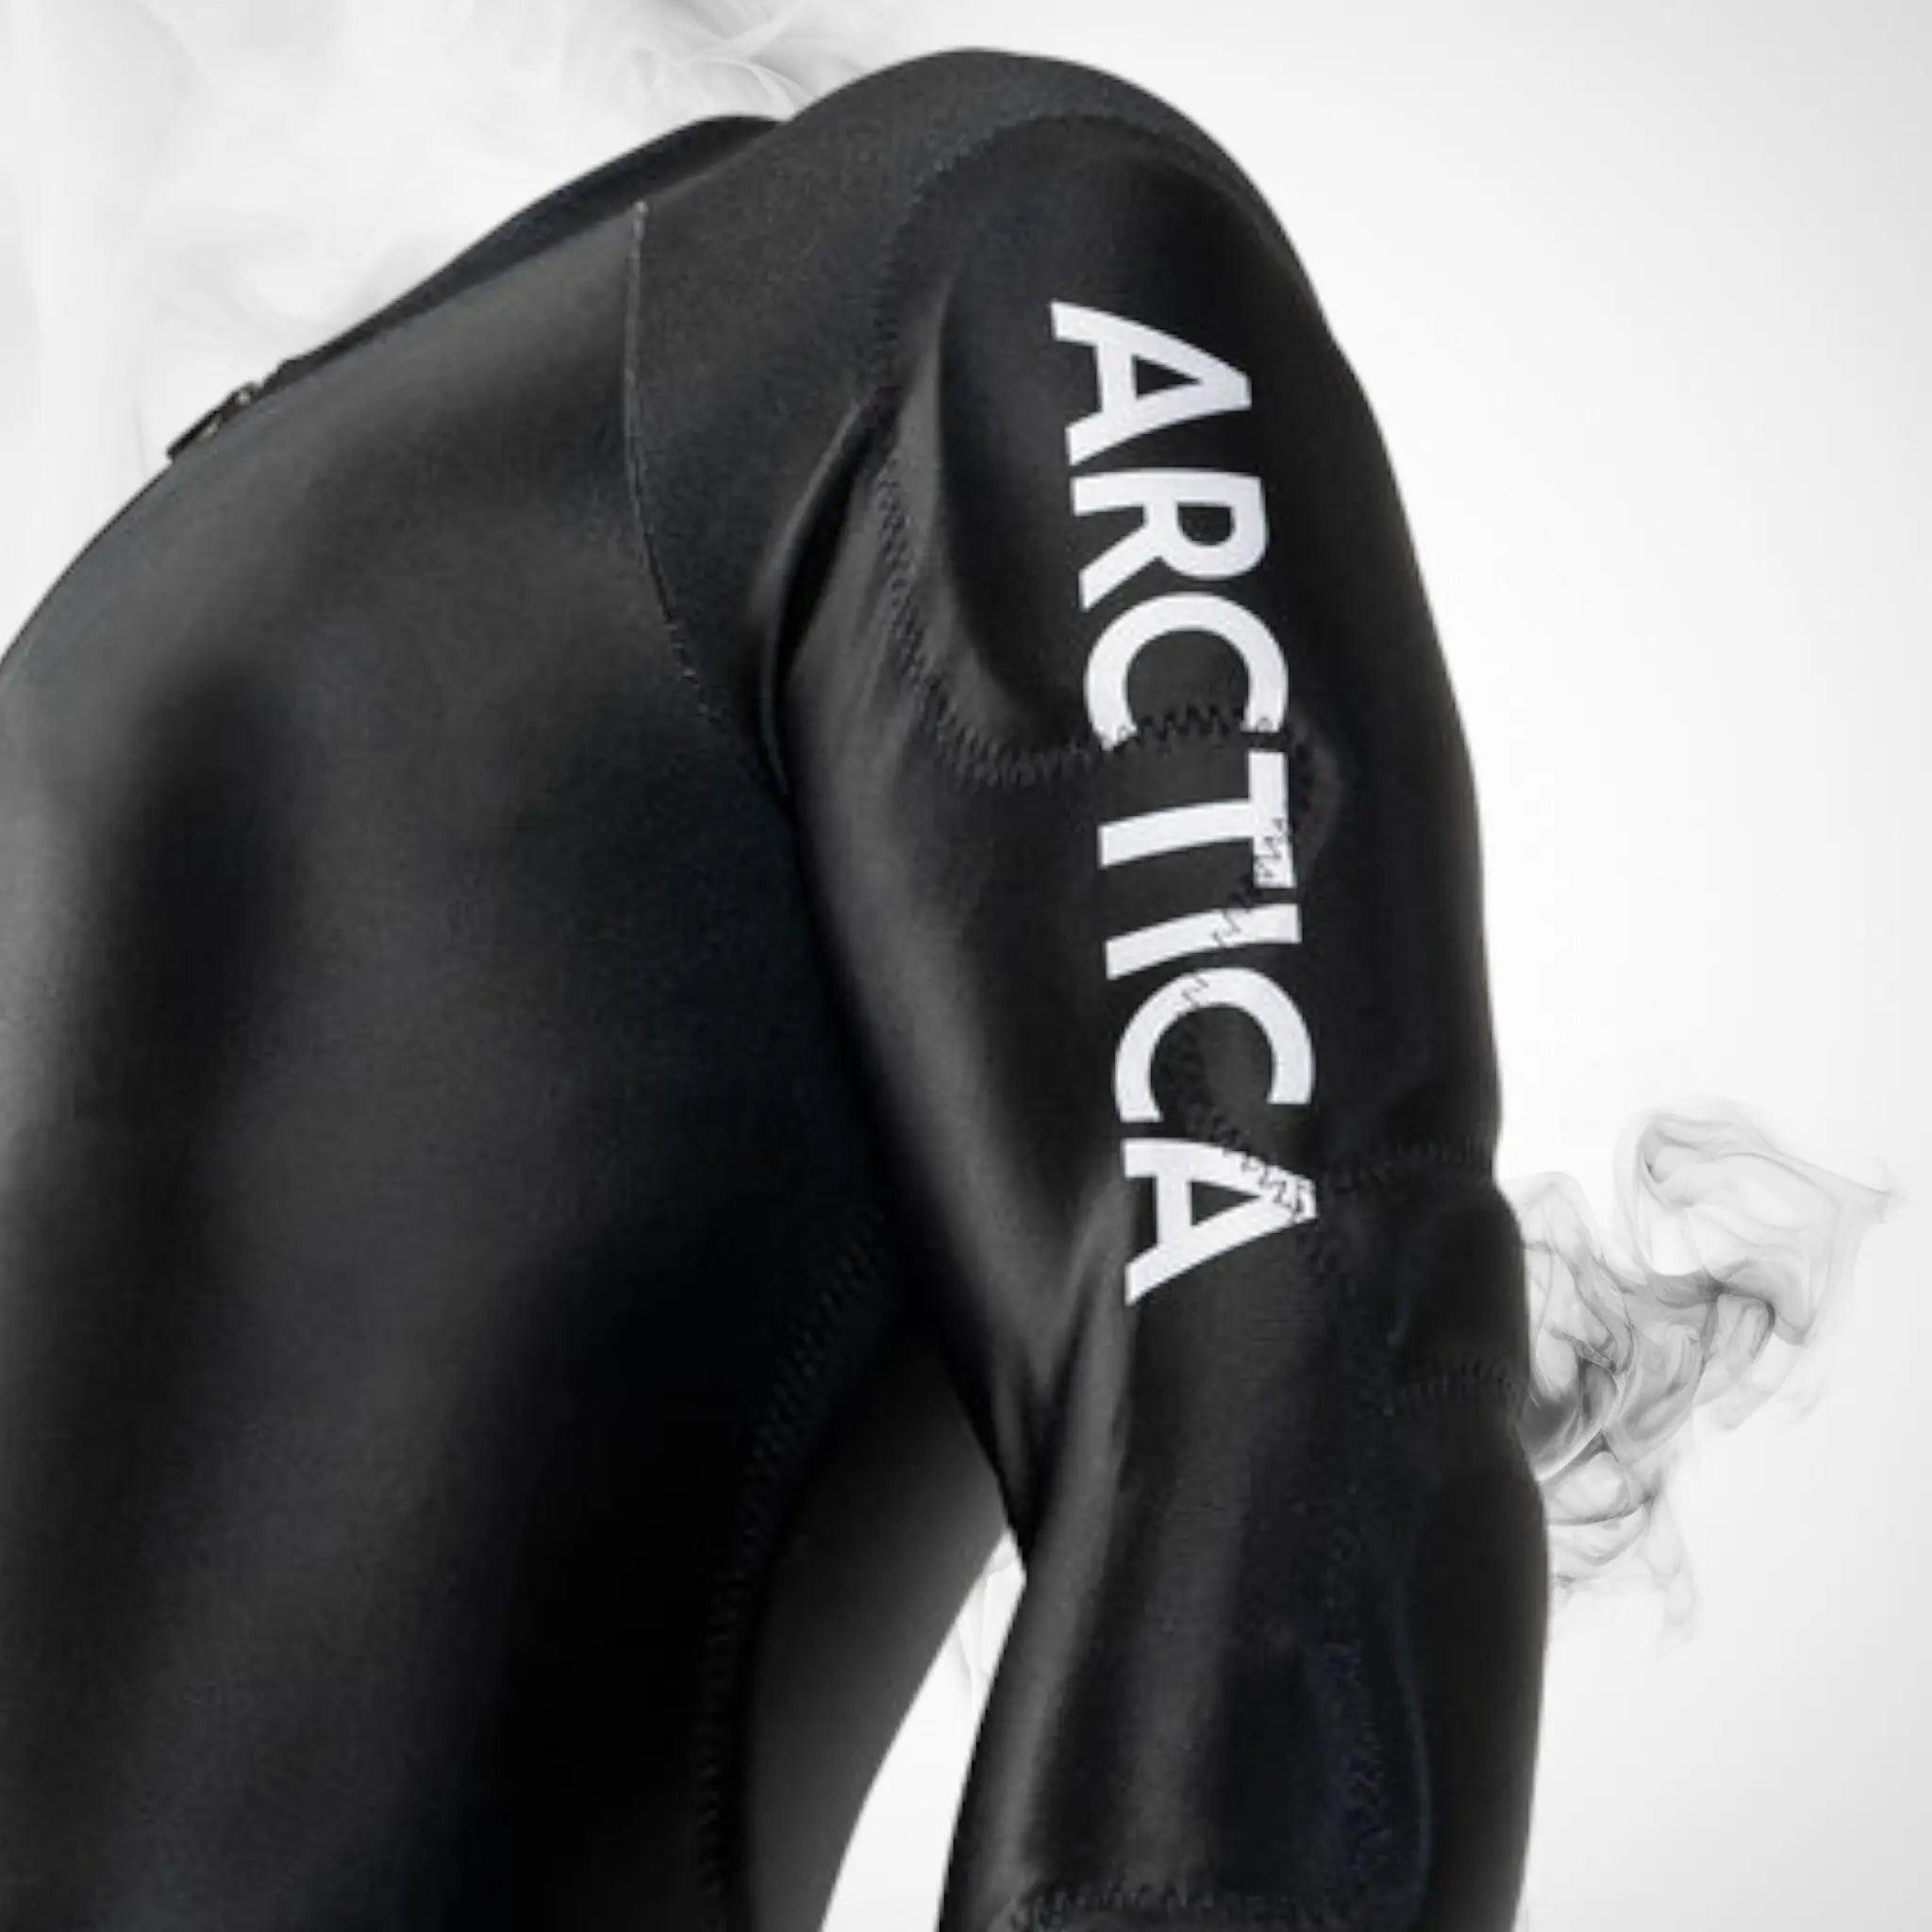 Arctica Adult Apex GS Suit - Dash Racegear 